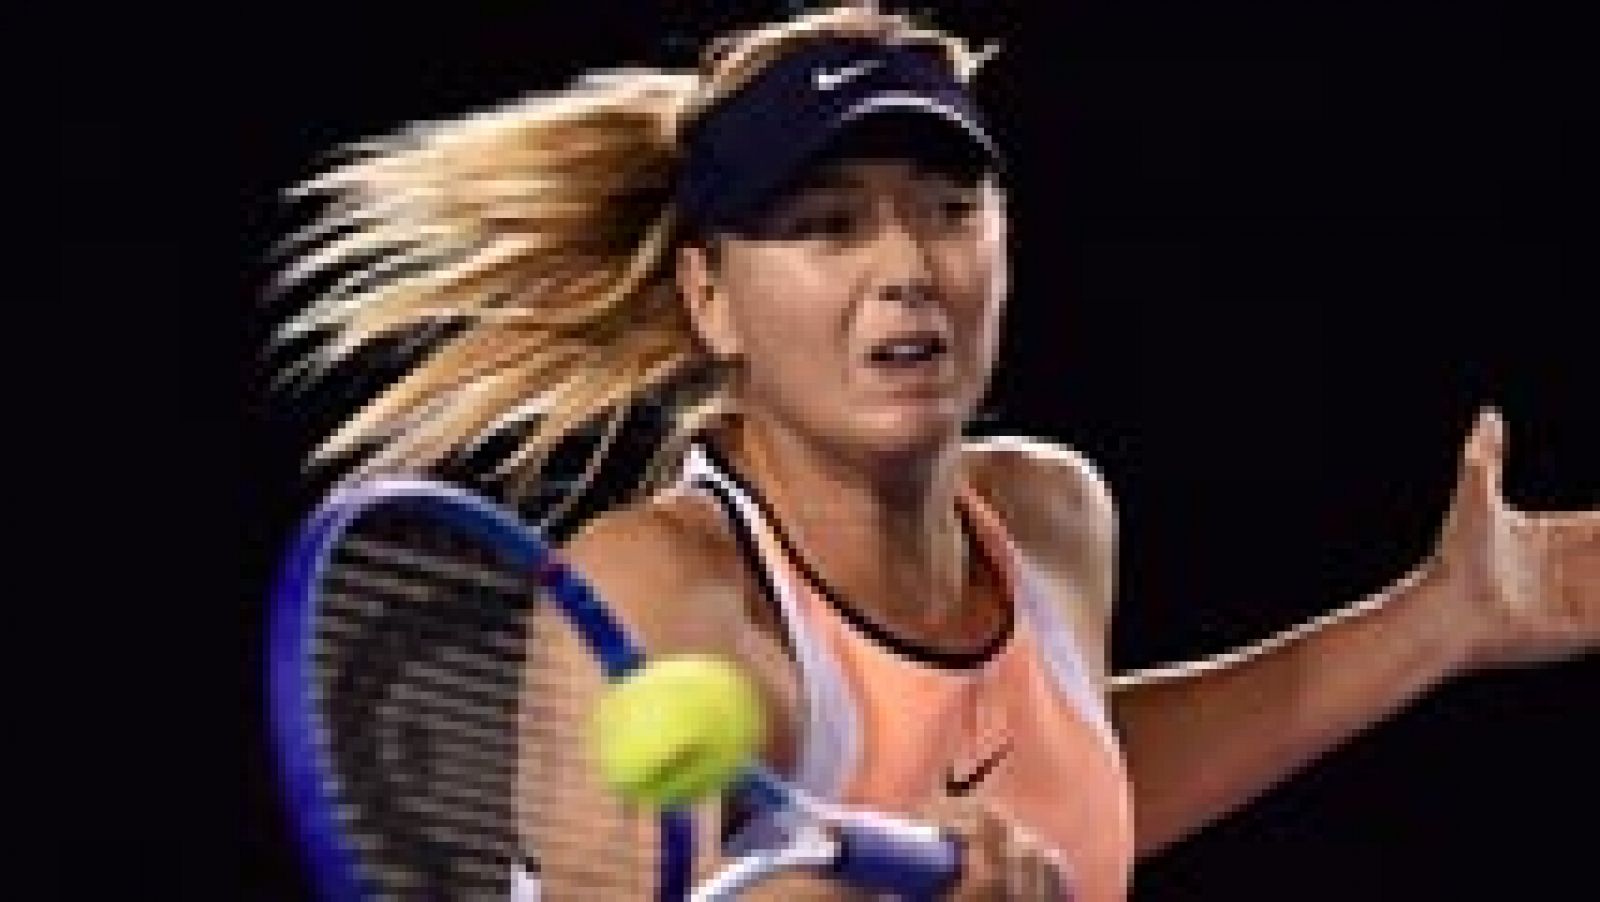 Telediario 1: Sharapova, positivo en un control antidopaje en el Open de Australia | RTVE Play